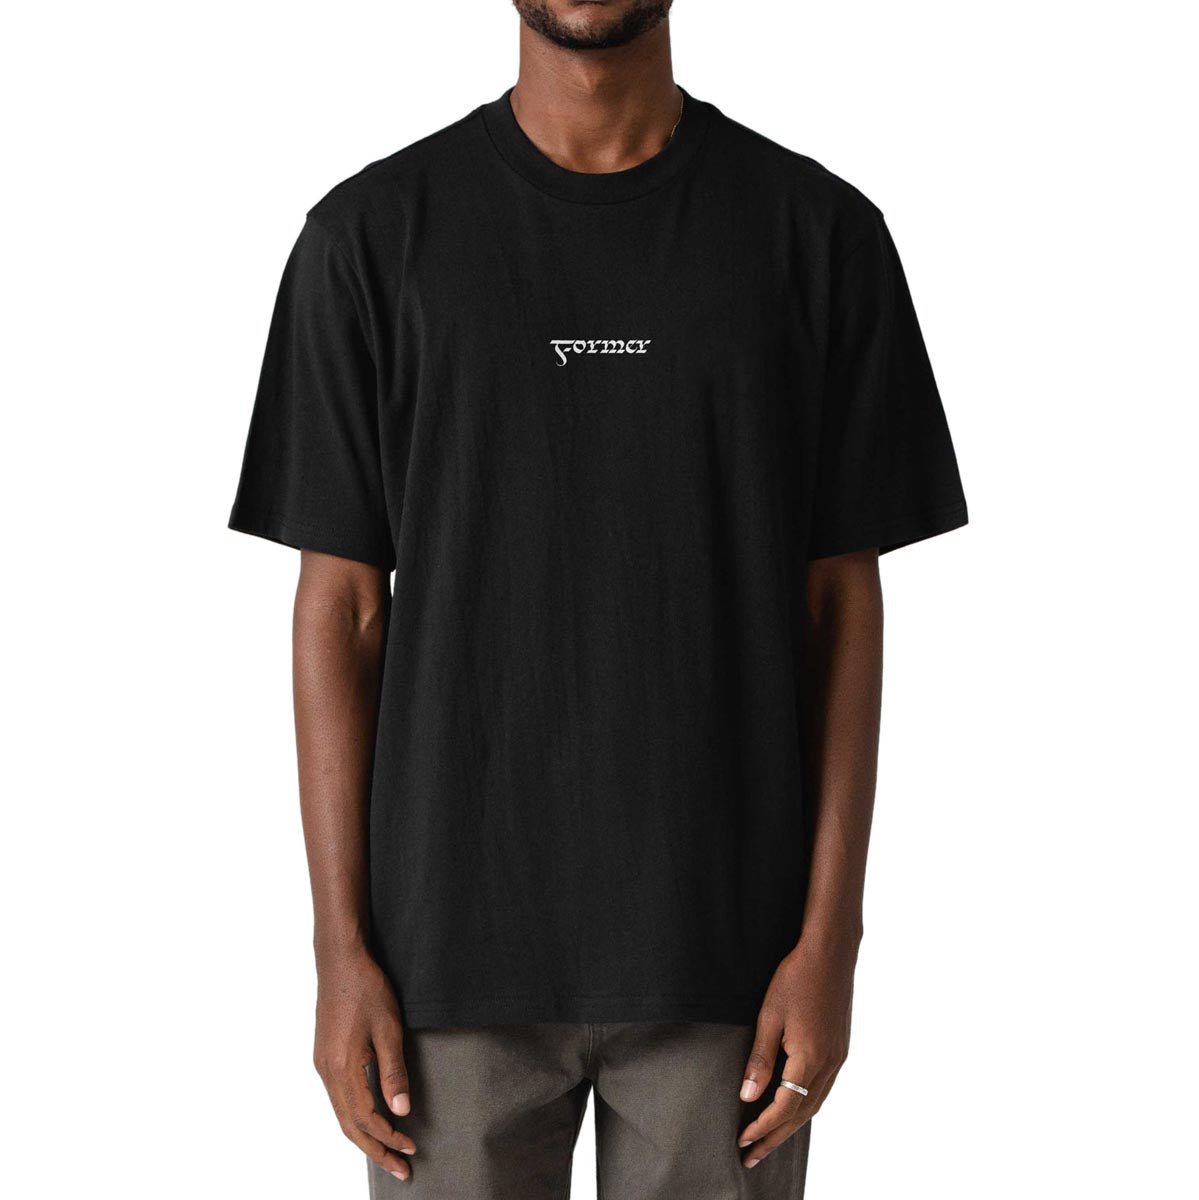 Former Tribute T-Shirt - Black image 2